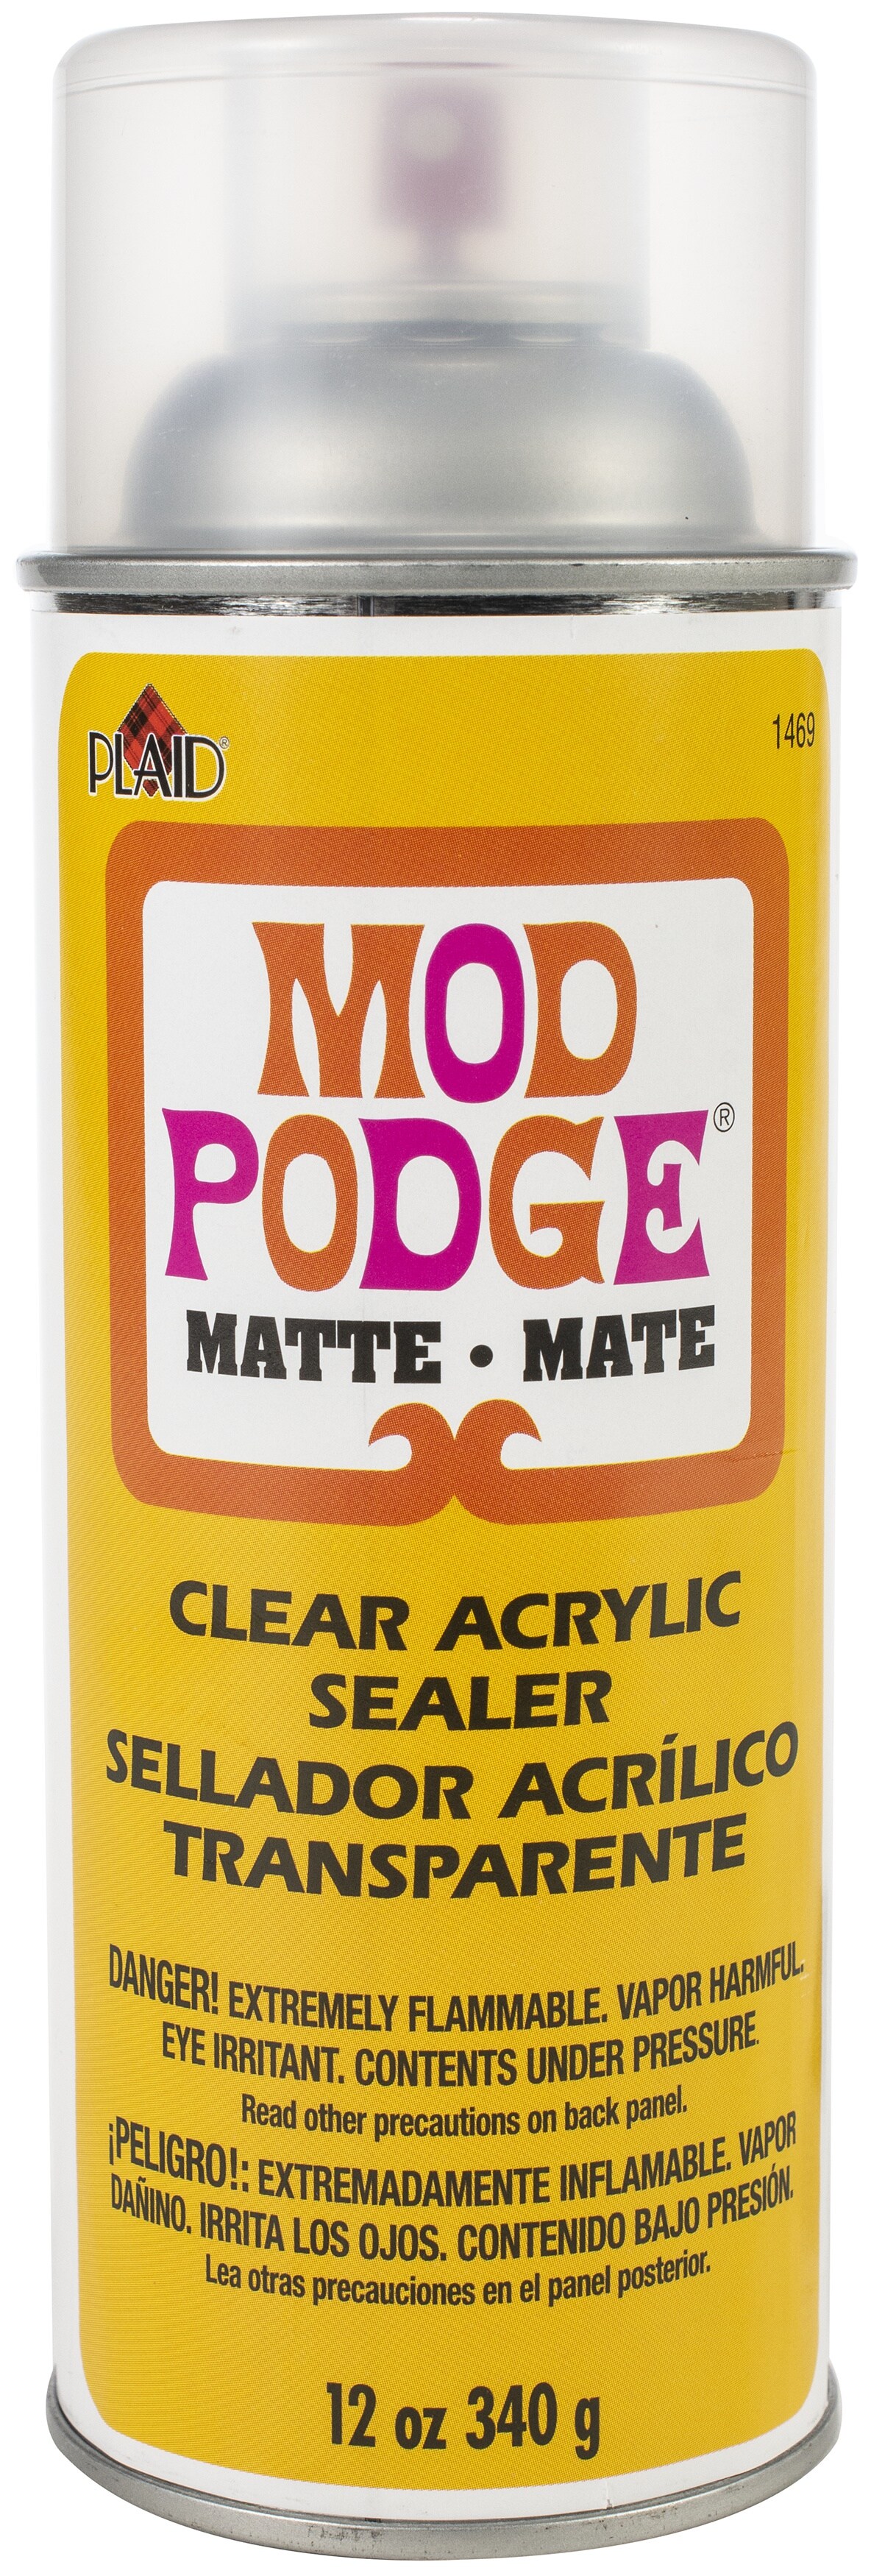 Mod Podge Clear Acrylic Sealer, 12 ounce, Matte